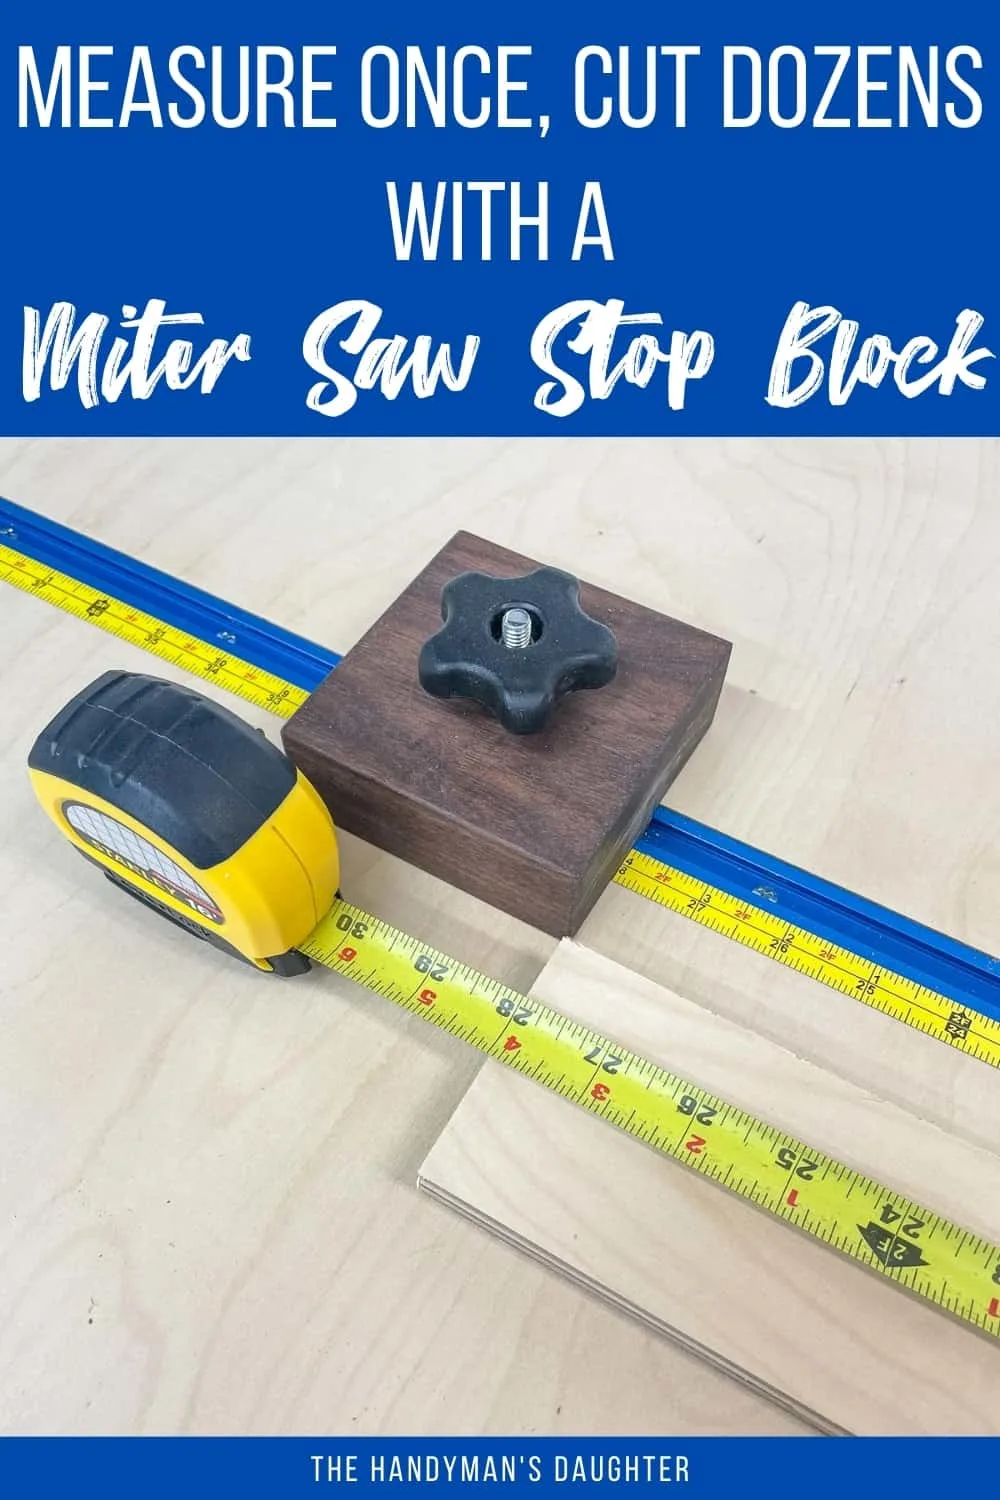 miter saw stop block system